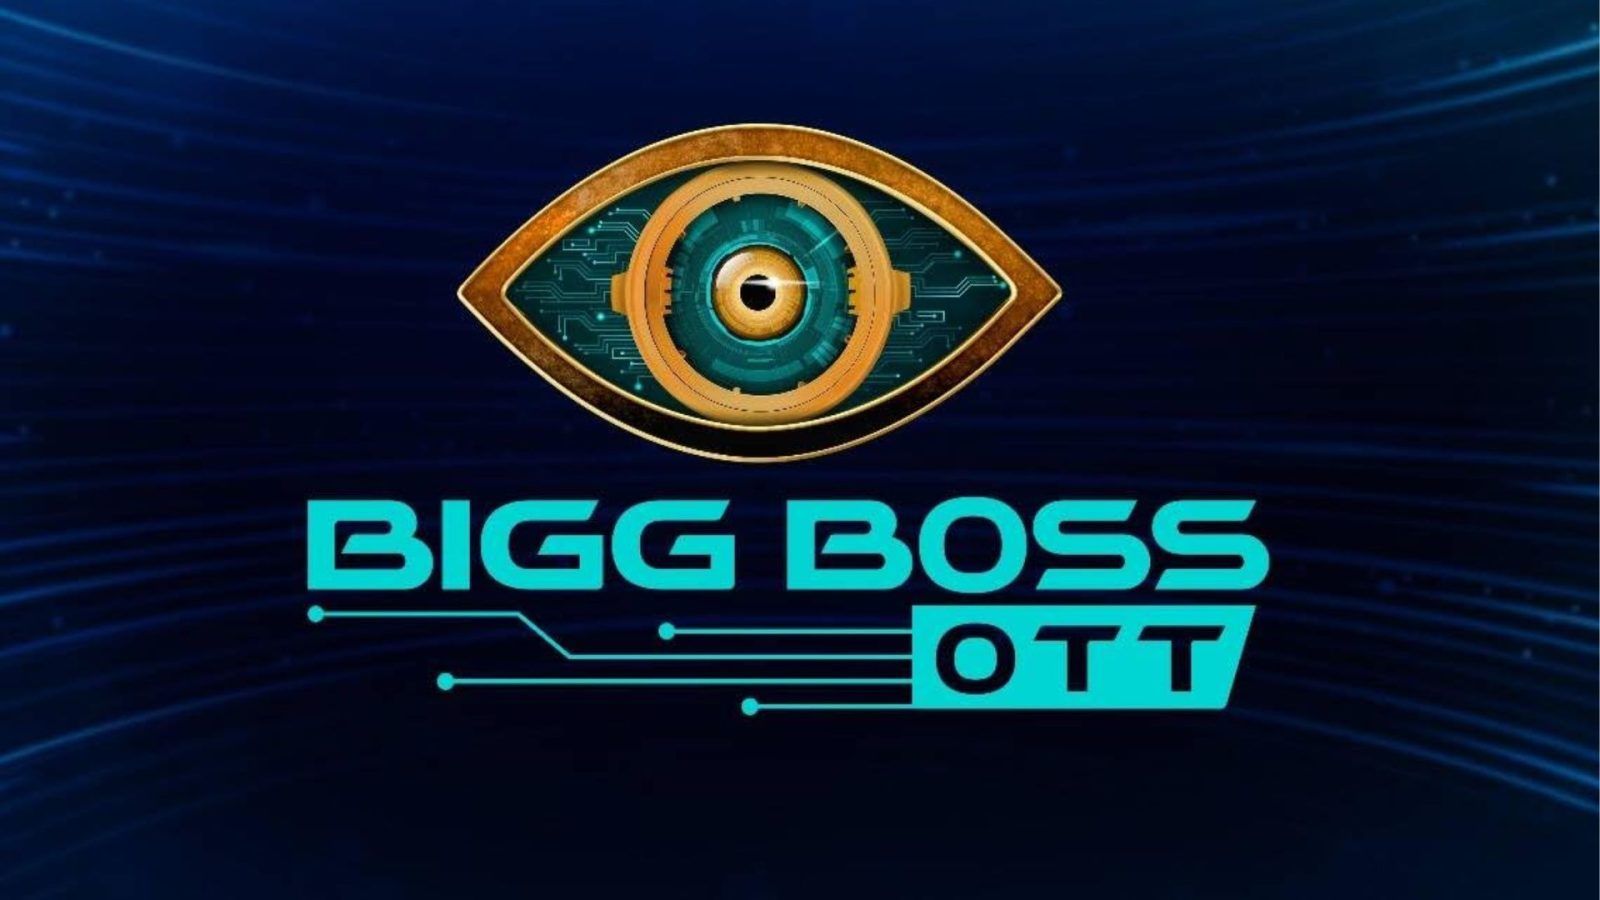 Bigg Boss OTT season 2 finale: Date, finalists, prize money, and more